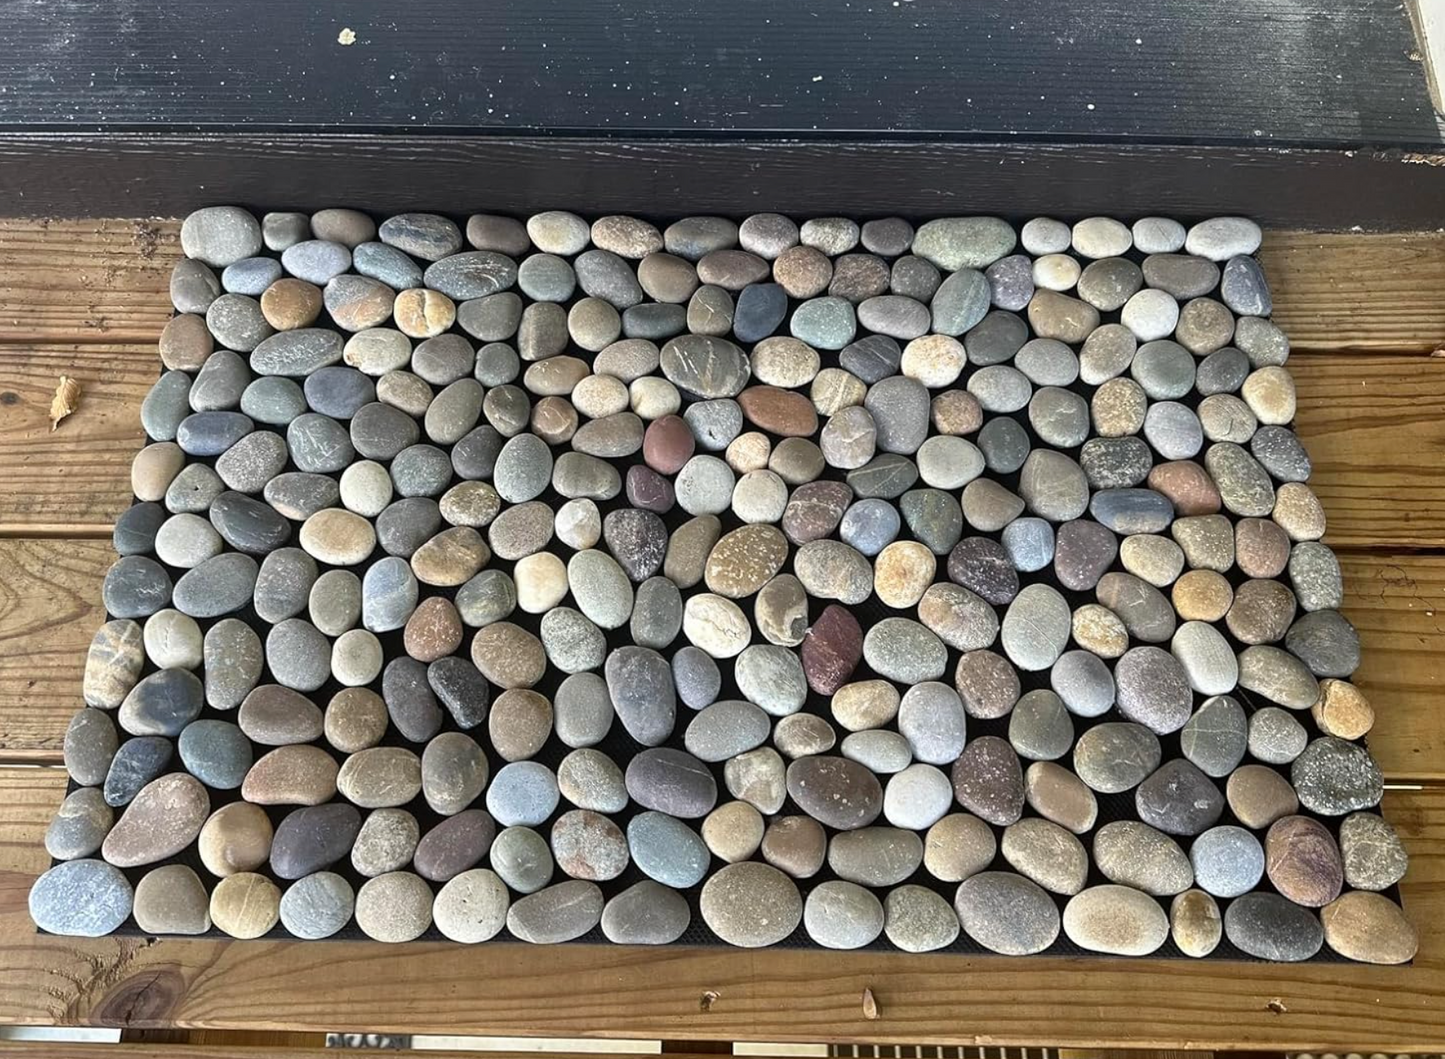 Brook Branch Mixed Stone Pebble Mat